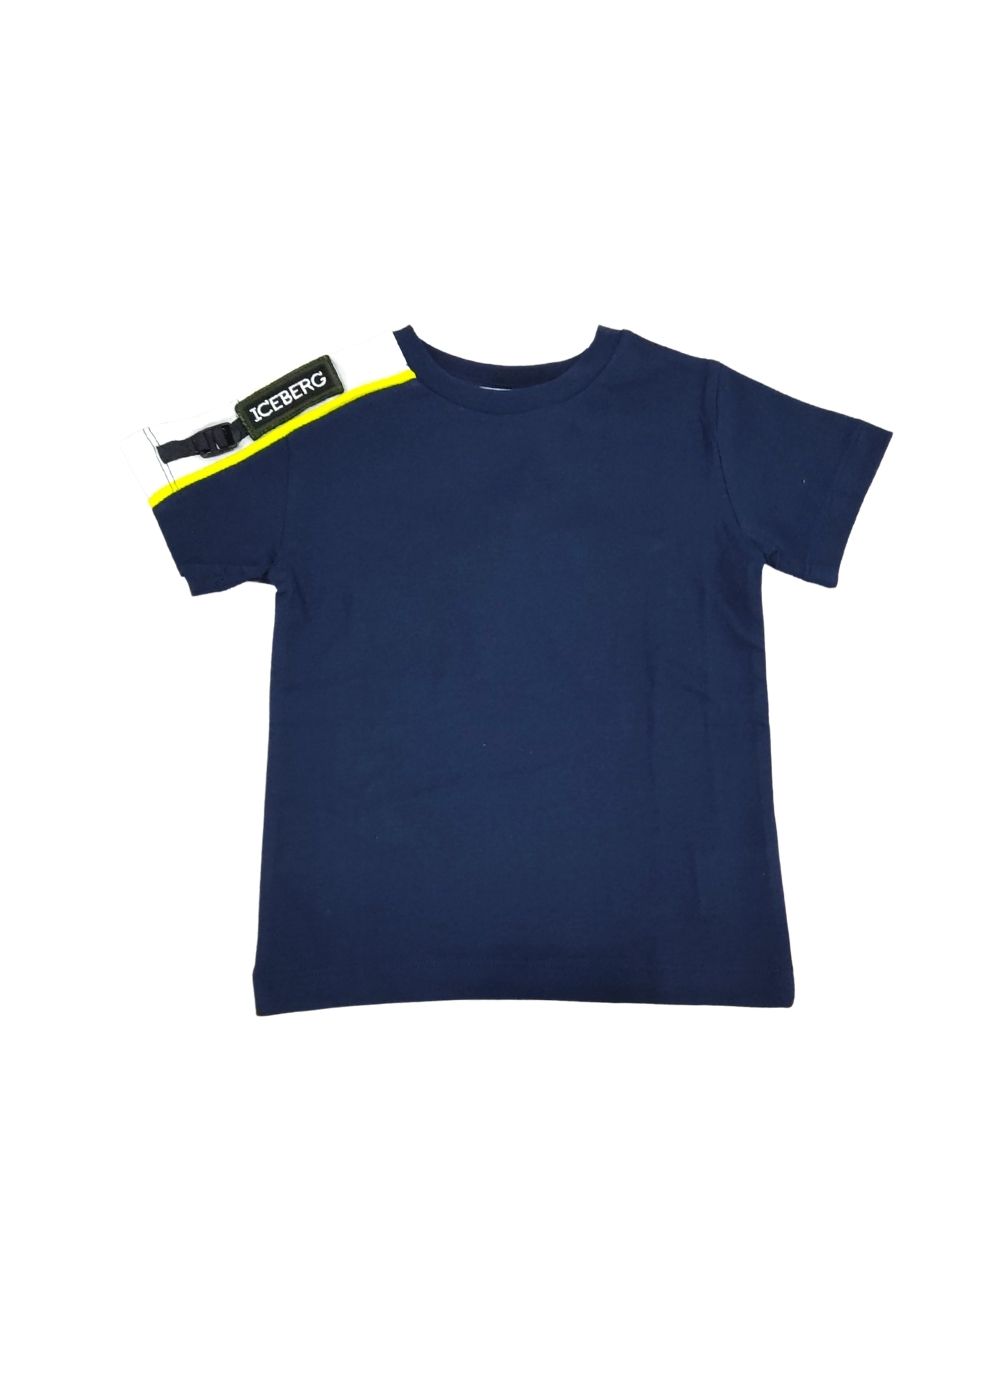 Featured image for “Iceberg T-shirt blu con fibbia”